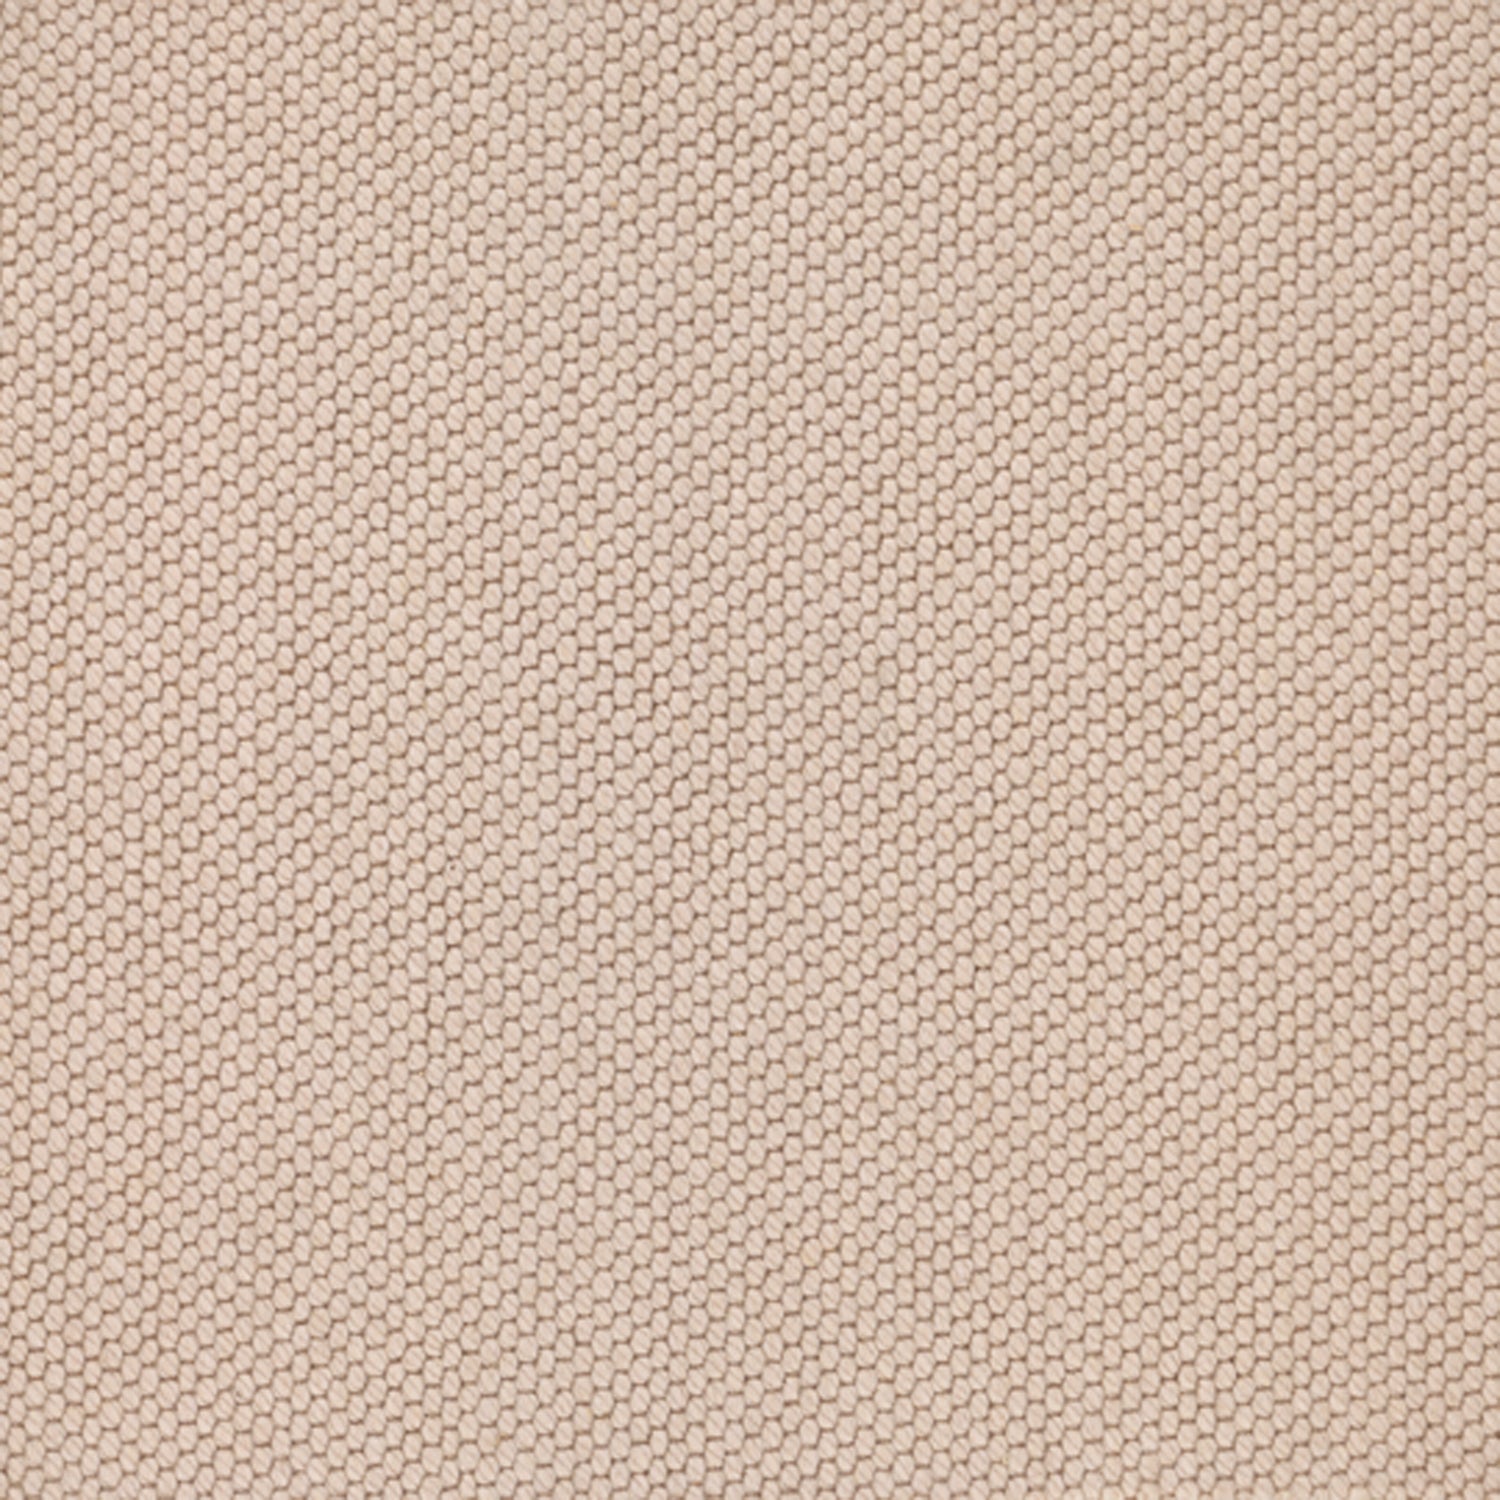 Wool broadloom carpet swatch in a chunky grid weave in cream.